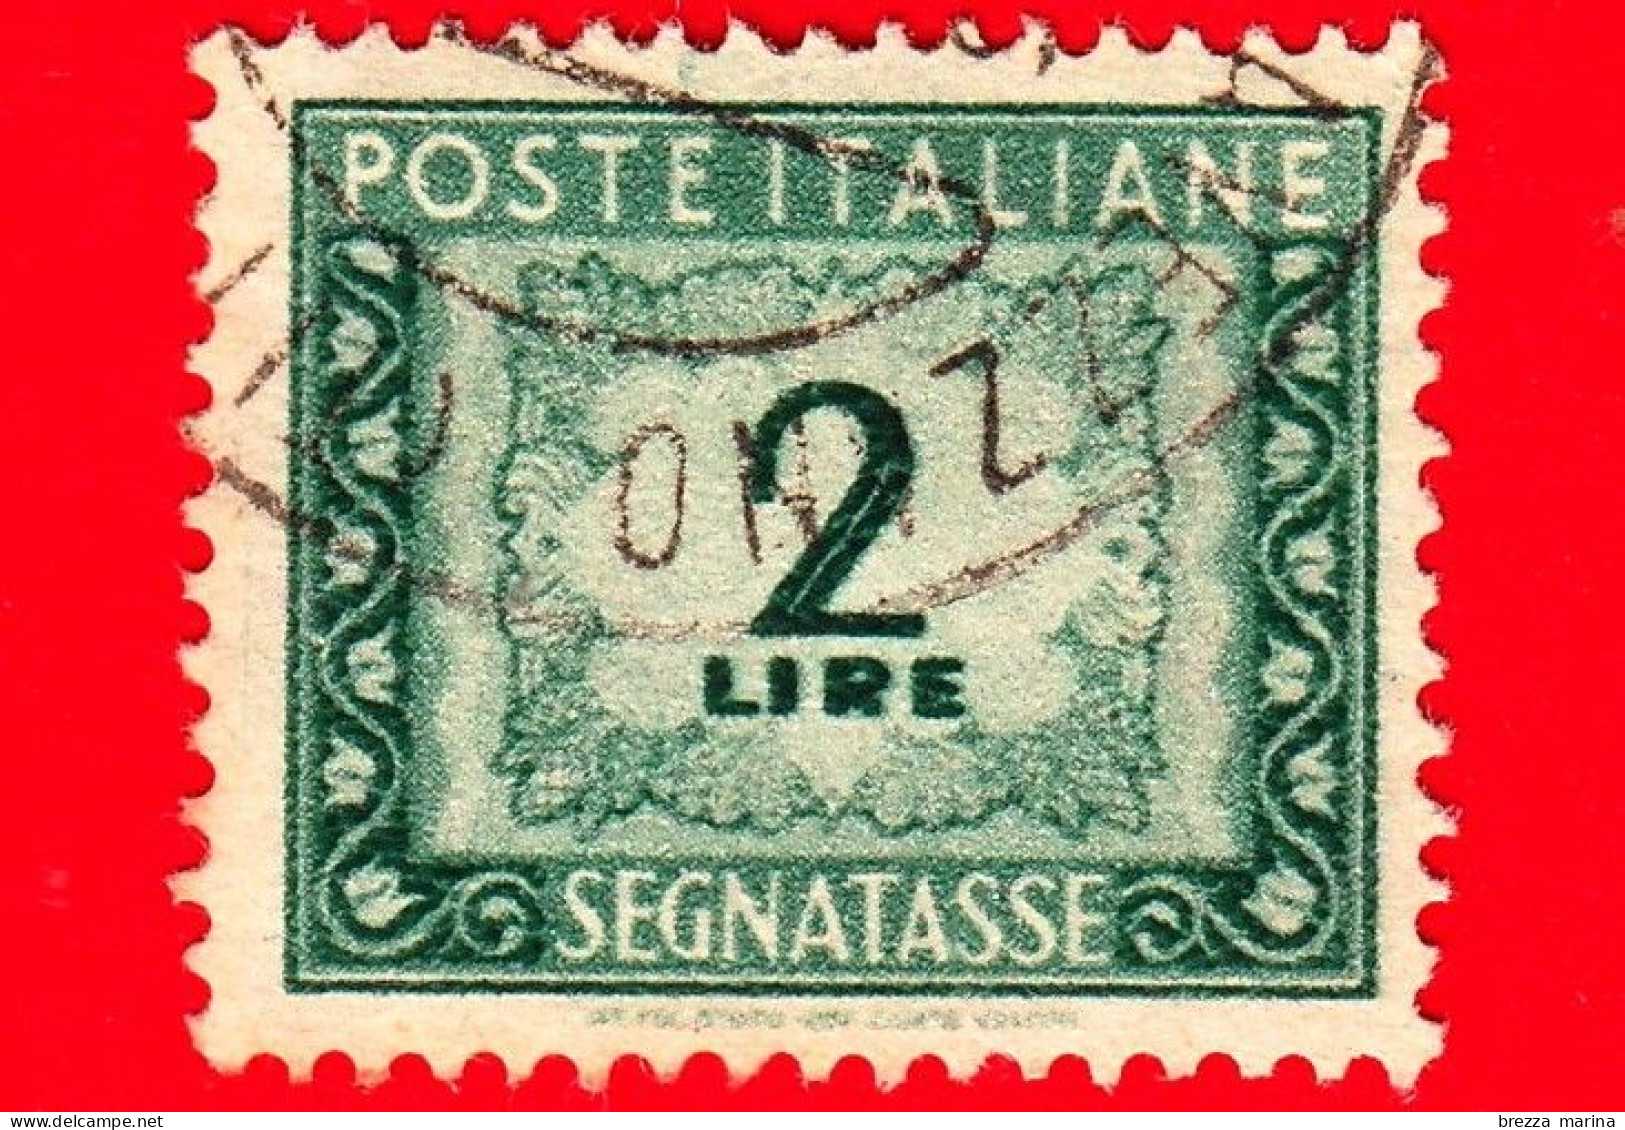 ITALIA - Usato -  Segnatasse - 1947 - Cifra E Decorazioni, Filigrana Ruota - 2 - Impuestos